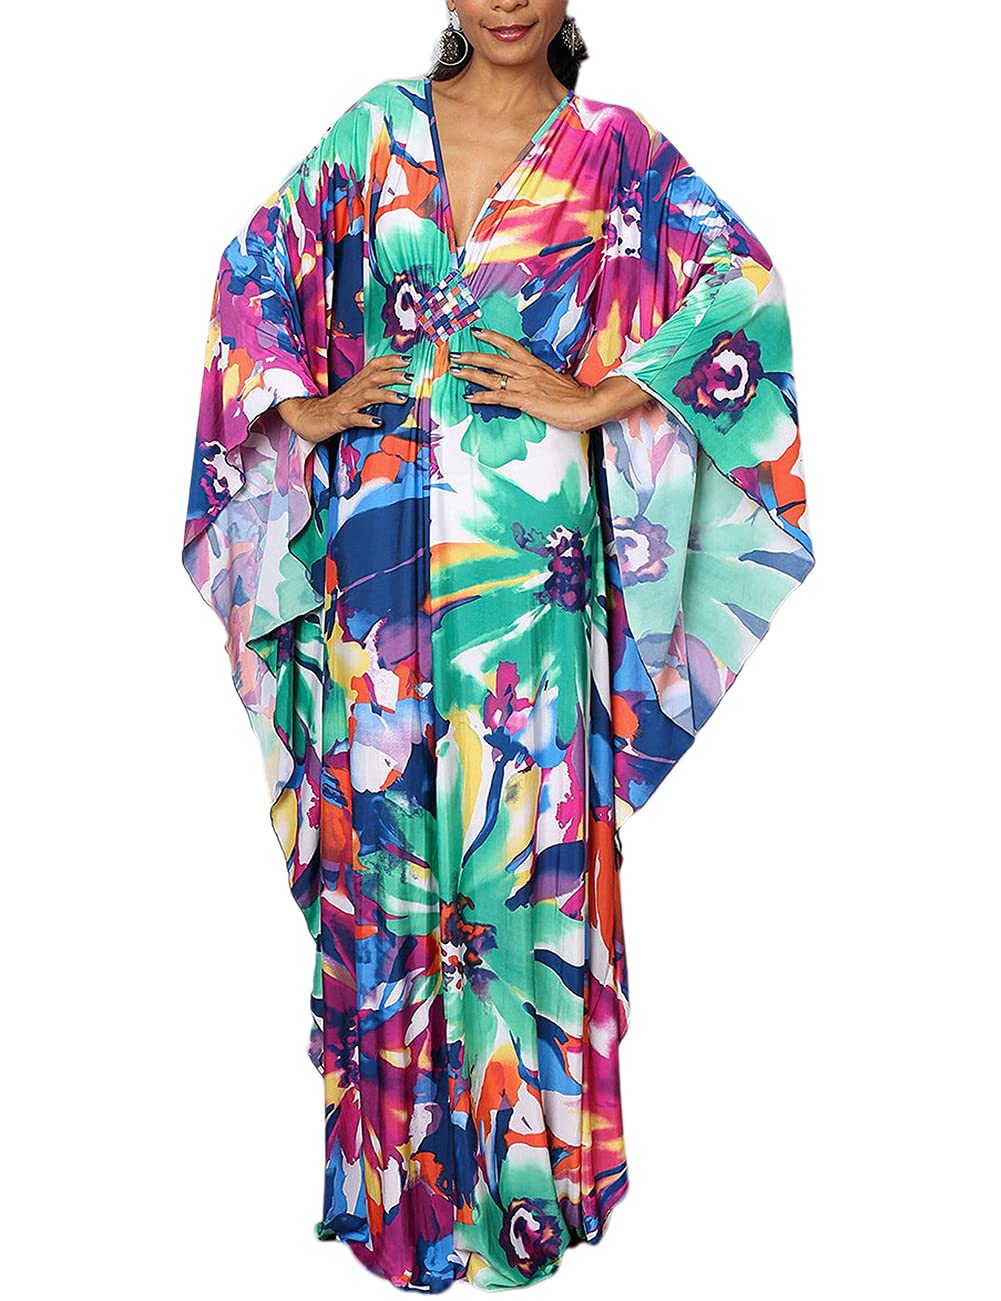 Women's Kaftan Beach Dress Plus Size Swimsuit Cover Up Maxi Dress